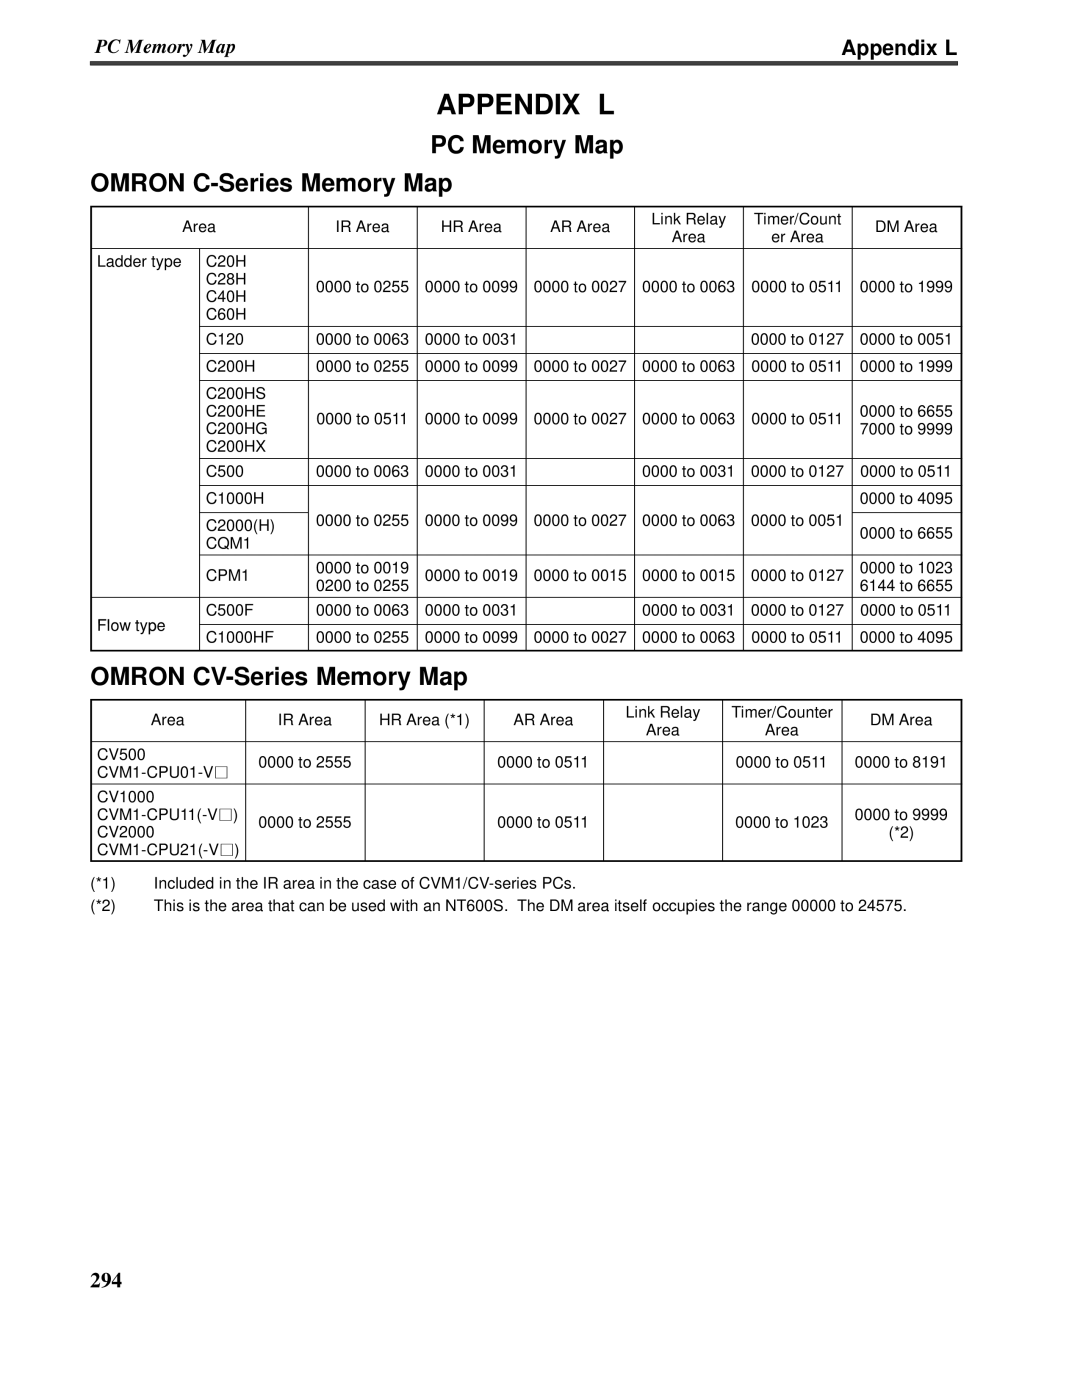 Omron V022-E3-1 operation manual Appendix L, OMRON C-SeriesMemory Map, OMRON CV-SeriesMemory Map, PC Memory Map 